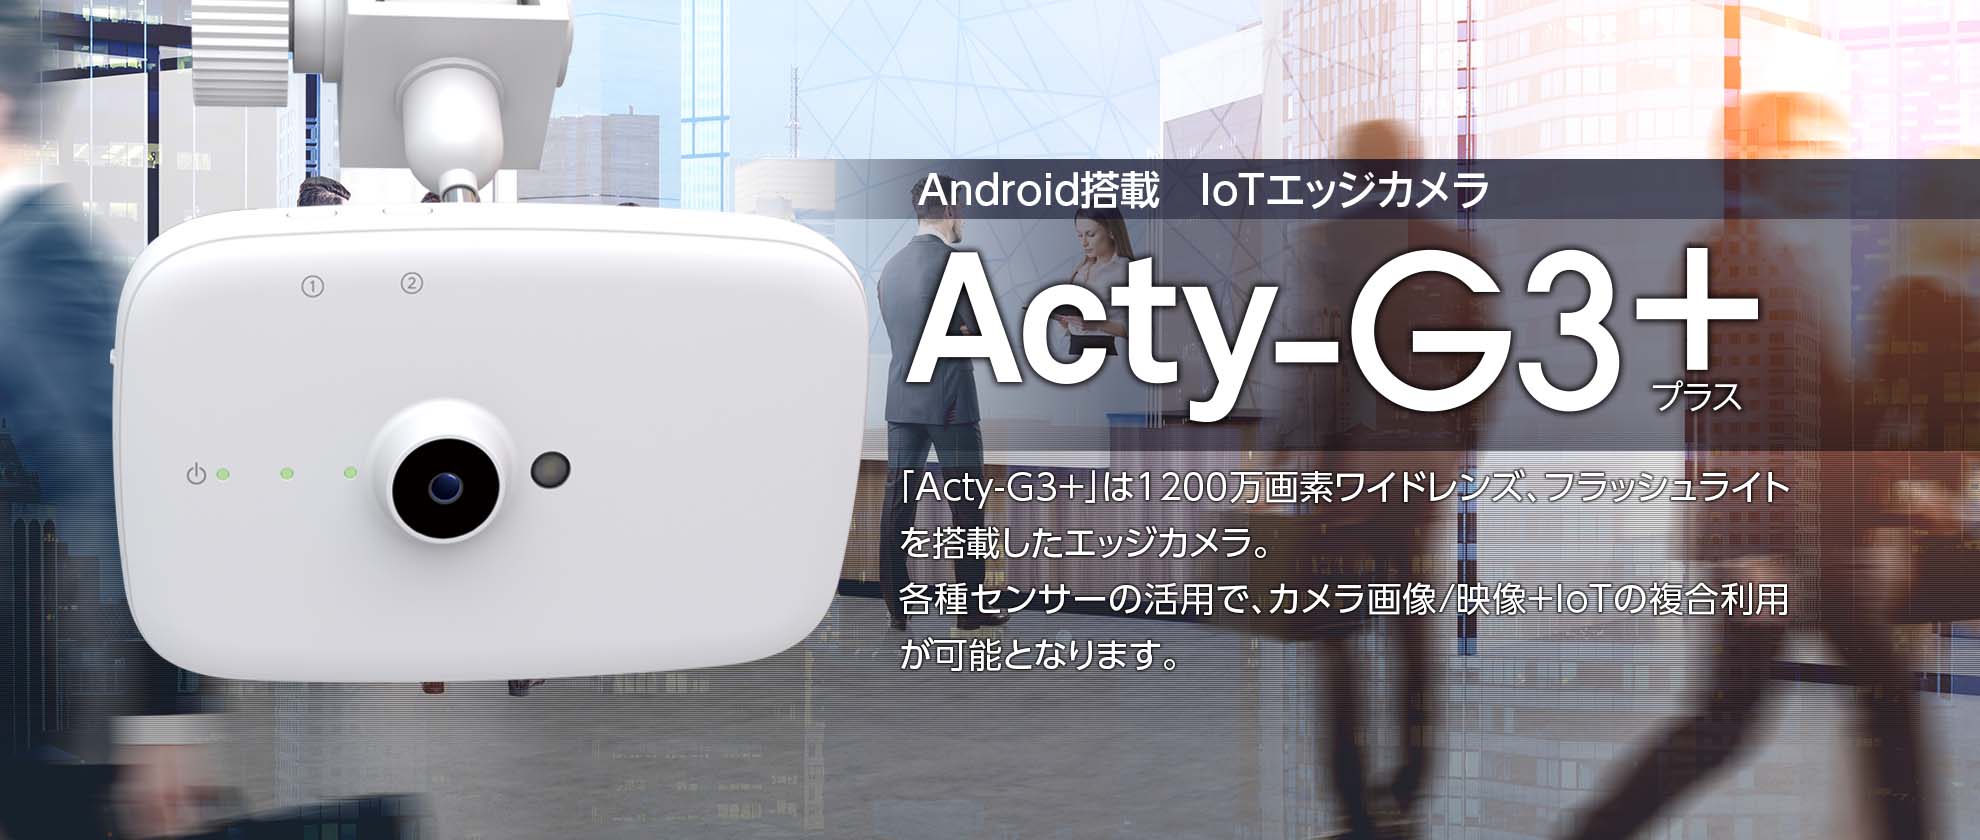 IoTエッジカメラ「Acty-G3+」